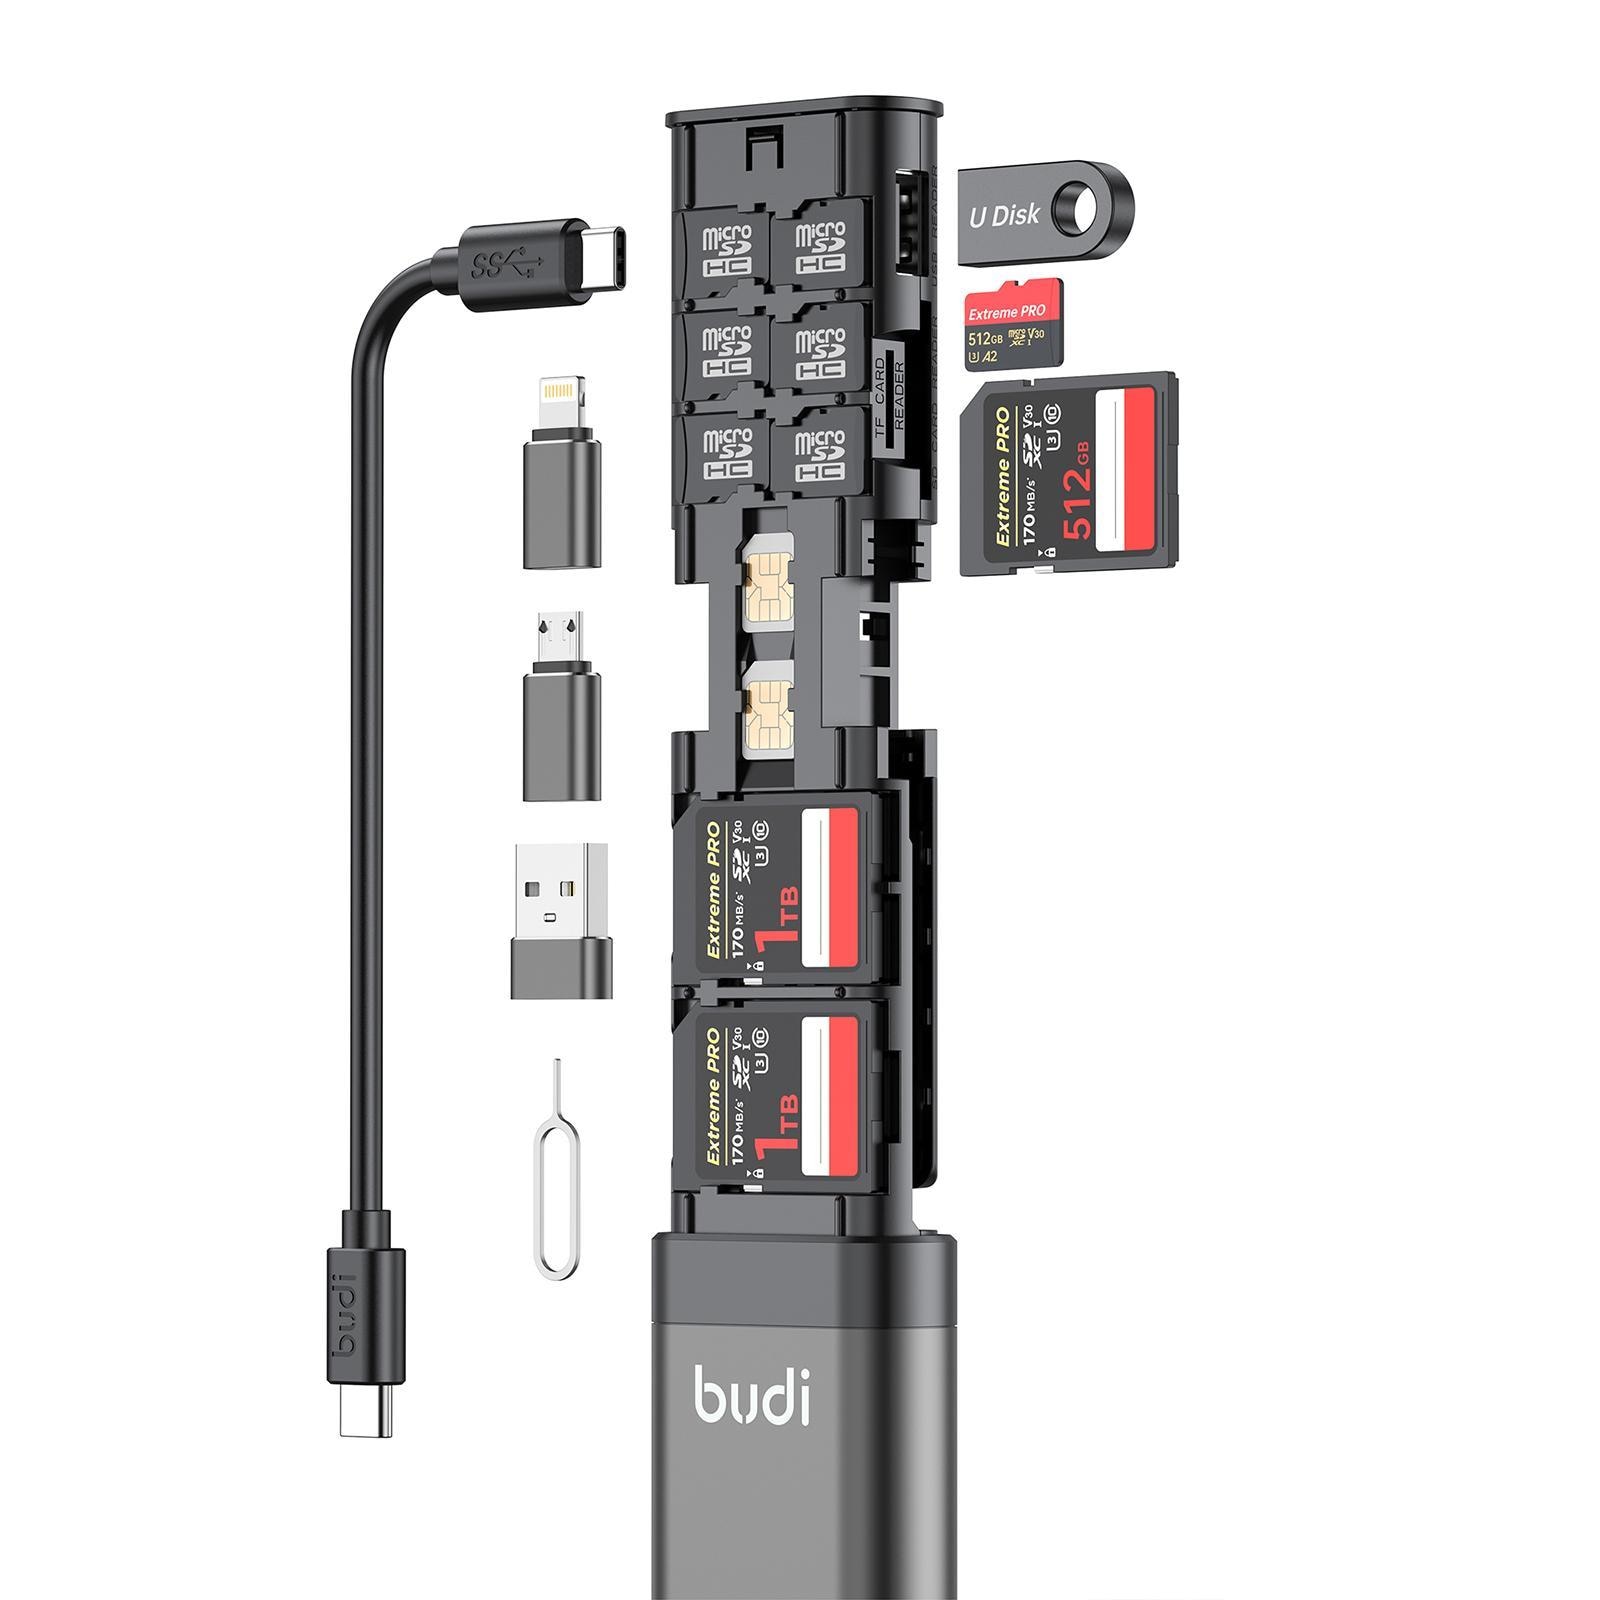 BUDI USB 3.0 데이터 전송 다기능 SD TF 카드 보관함, 아이폰 삼성용, 9 인 1 박스, 65W 고속 충전 케이블